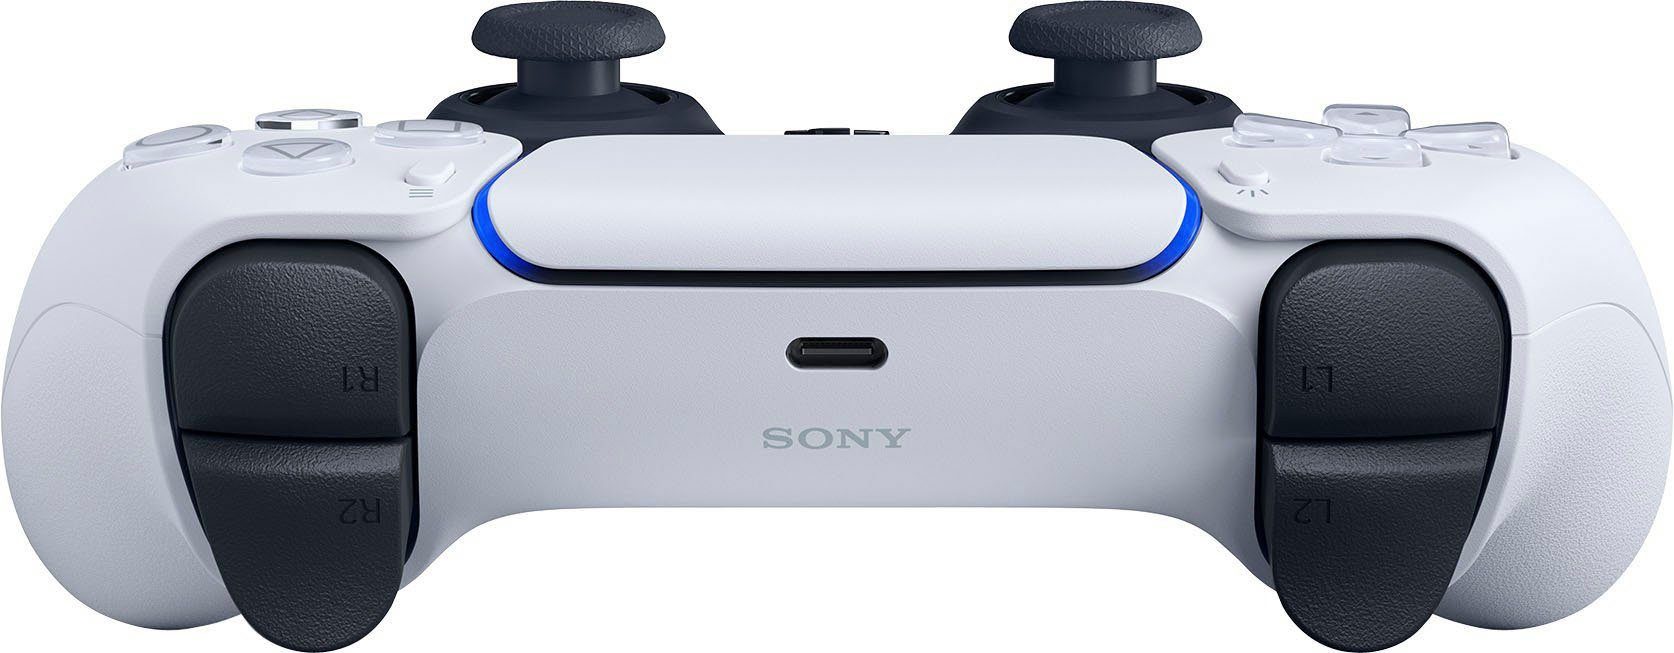 PlayStation 5 FIFA 23 Version) (Digitale Wireless-Controller + DualSense